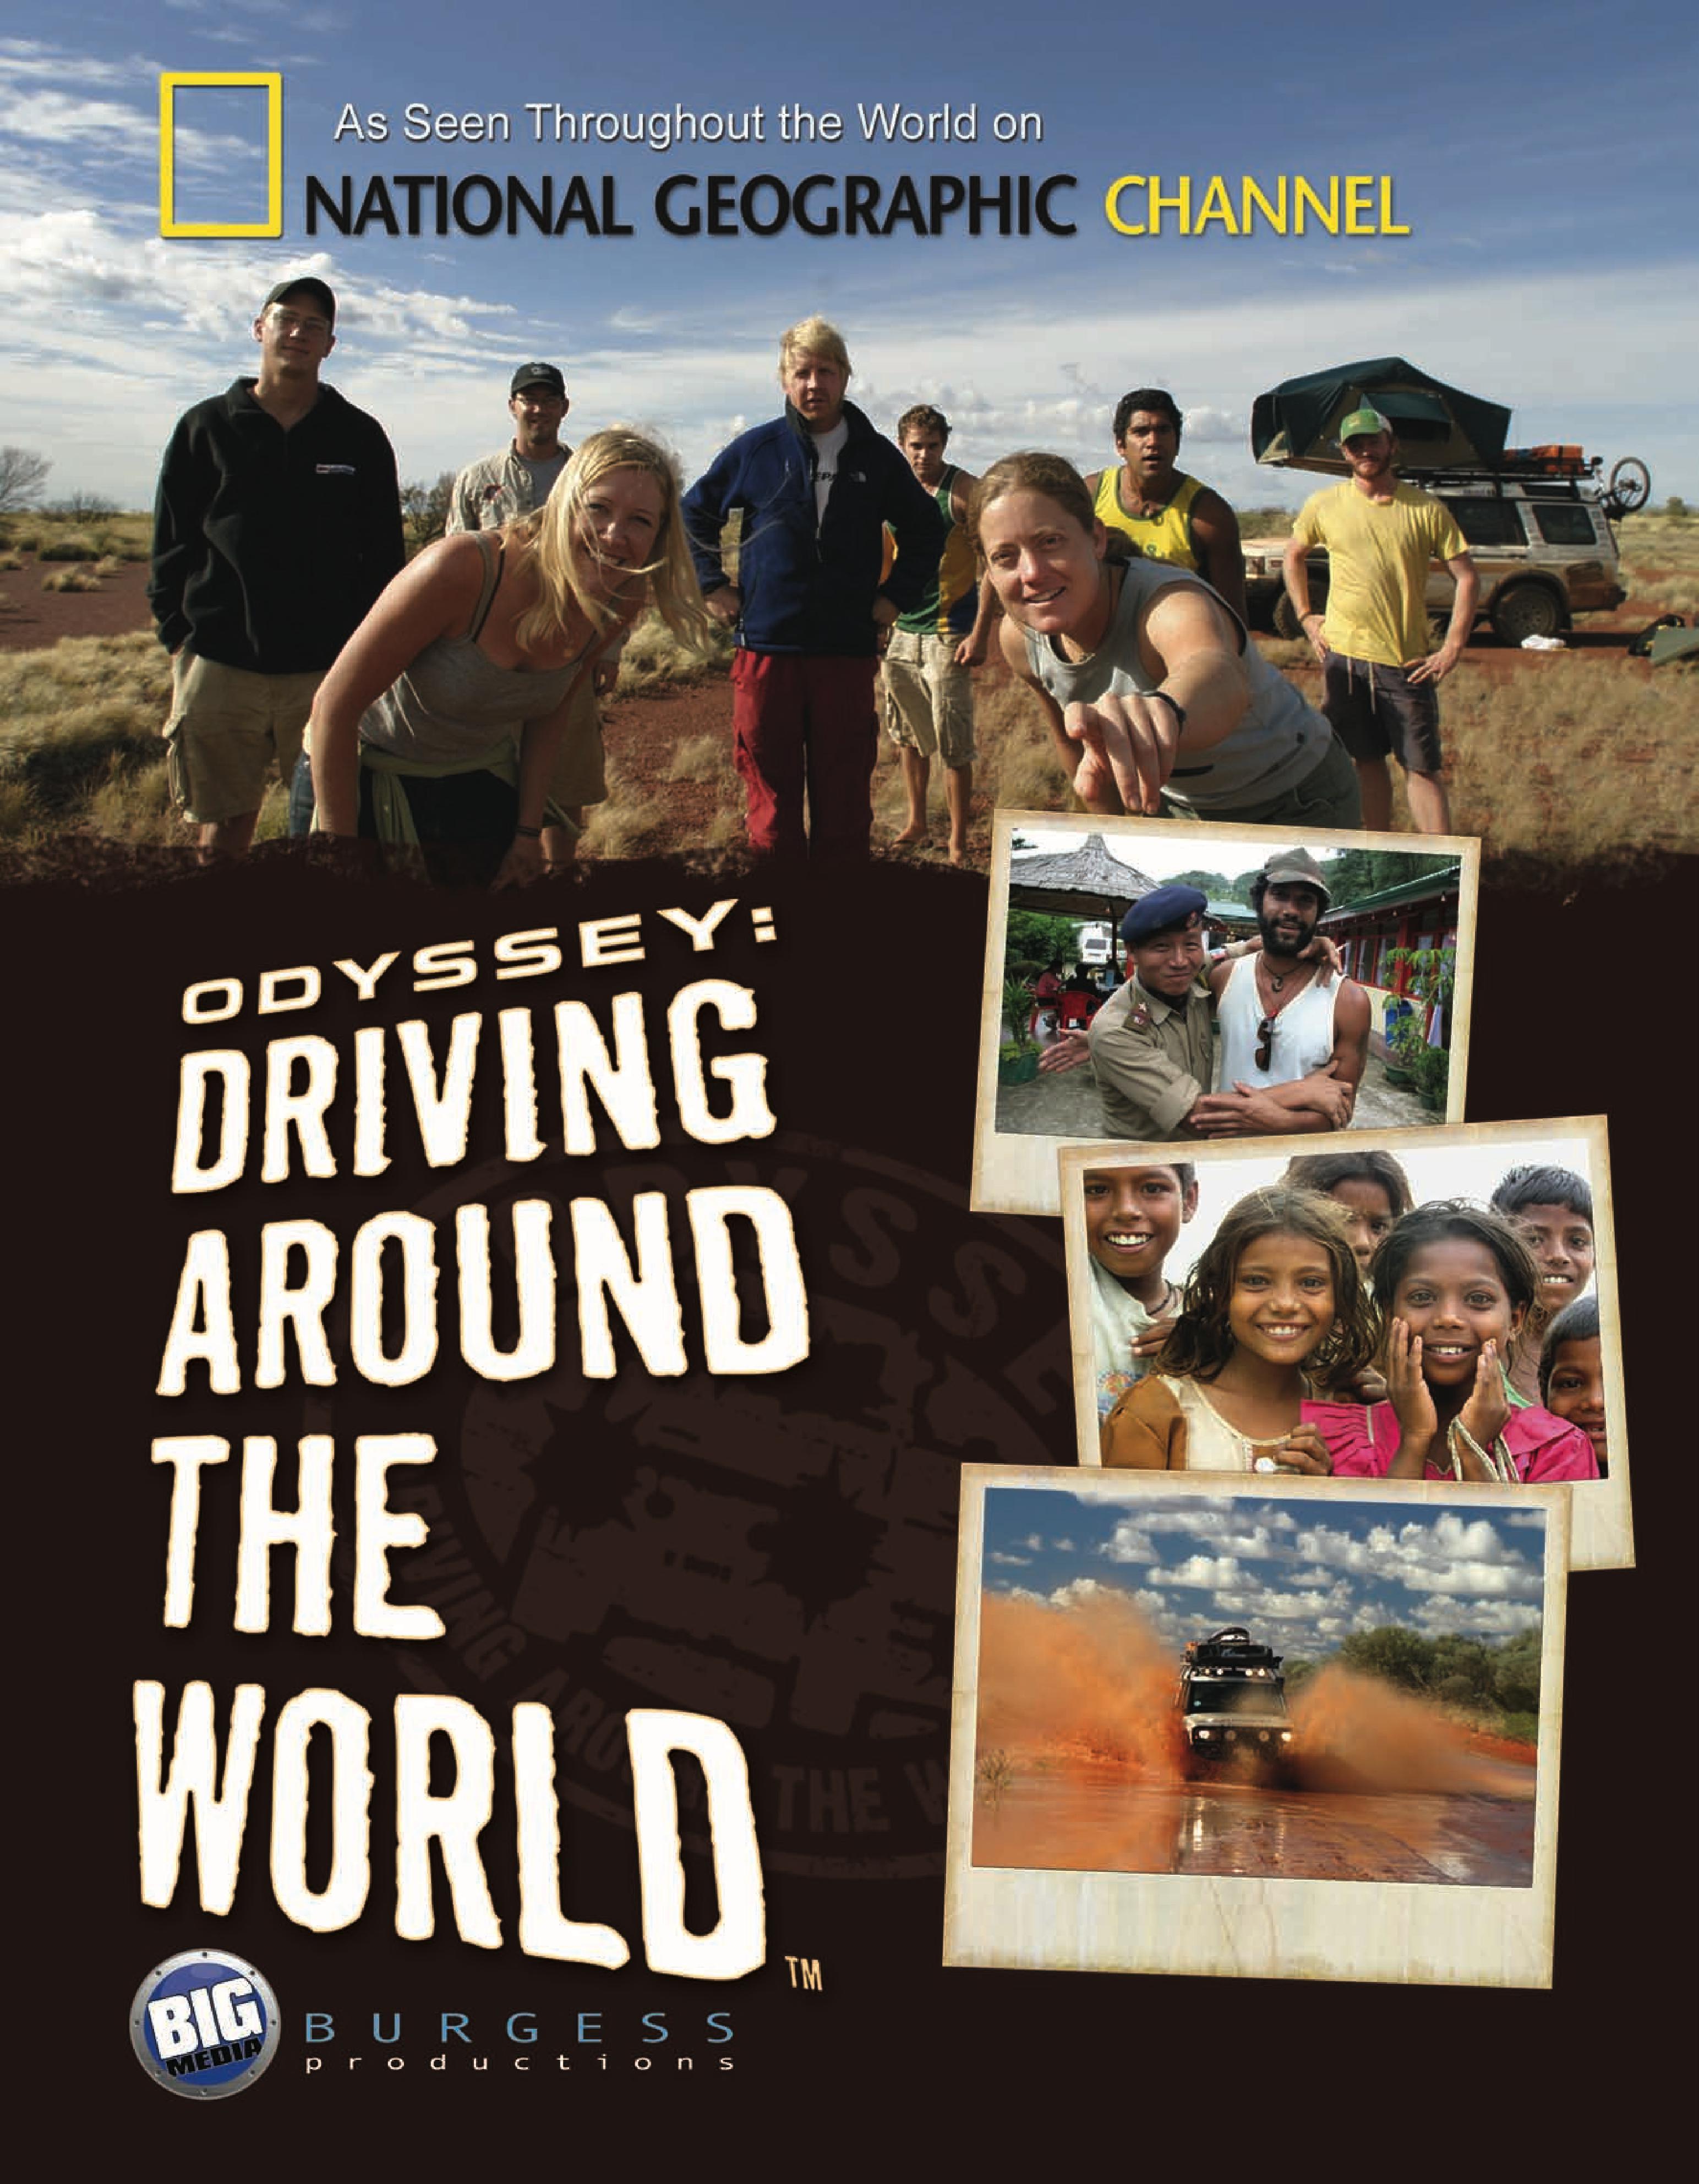 Odyssey Driving Around the World